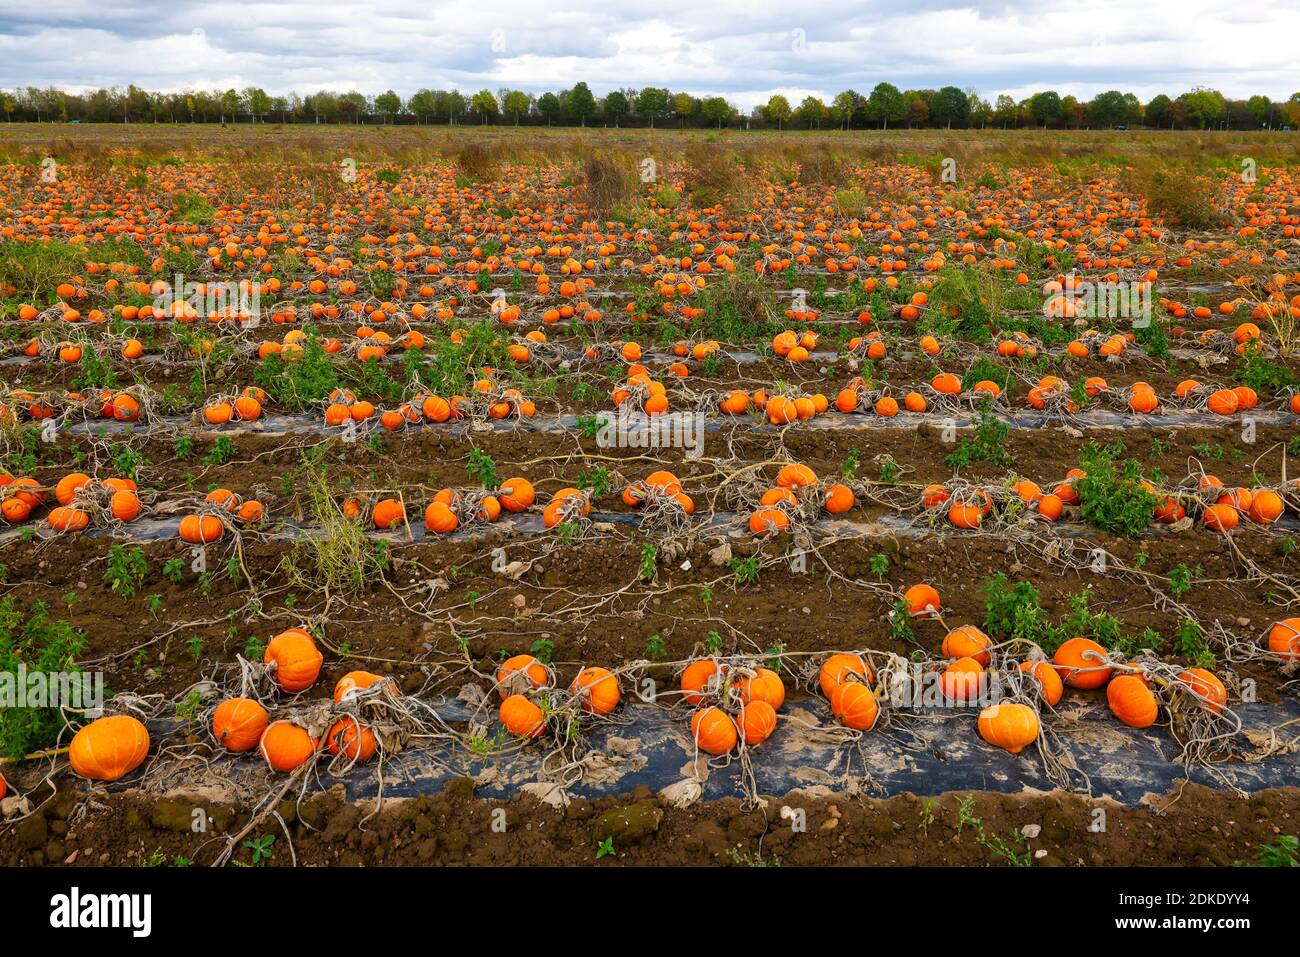 Koeln, North Rhine-Westphalia, Germany - Pumpkin field, Hokkaido pumpkins grow on plastic wrap in a field. Stock Photo